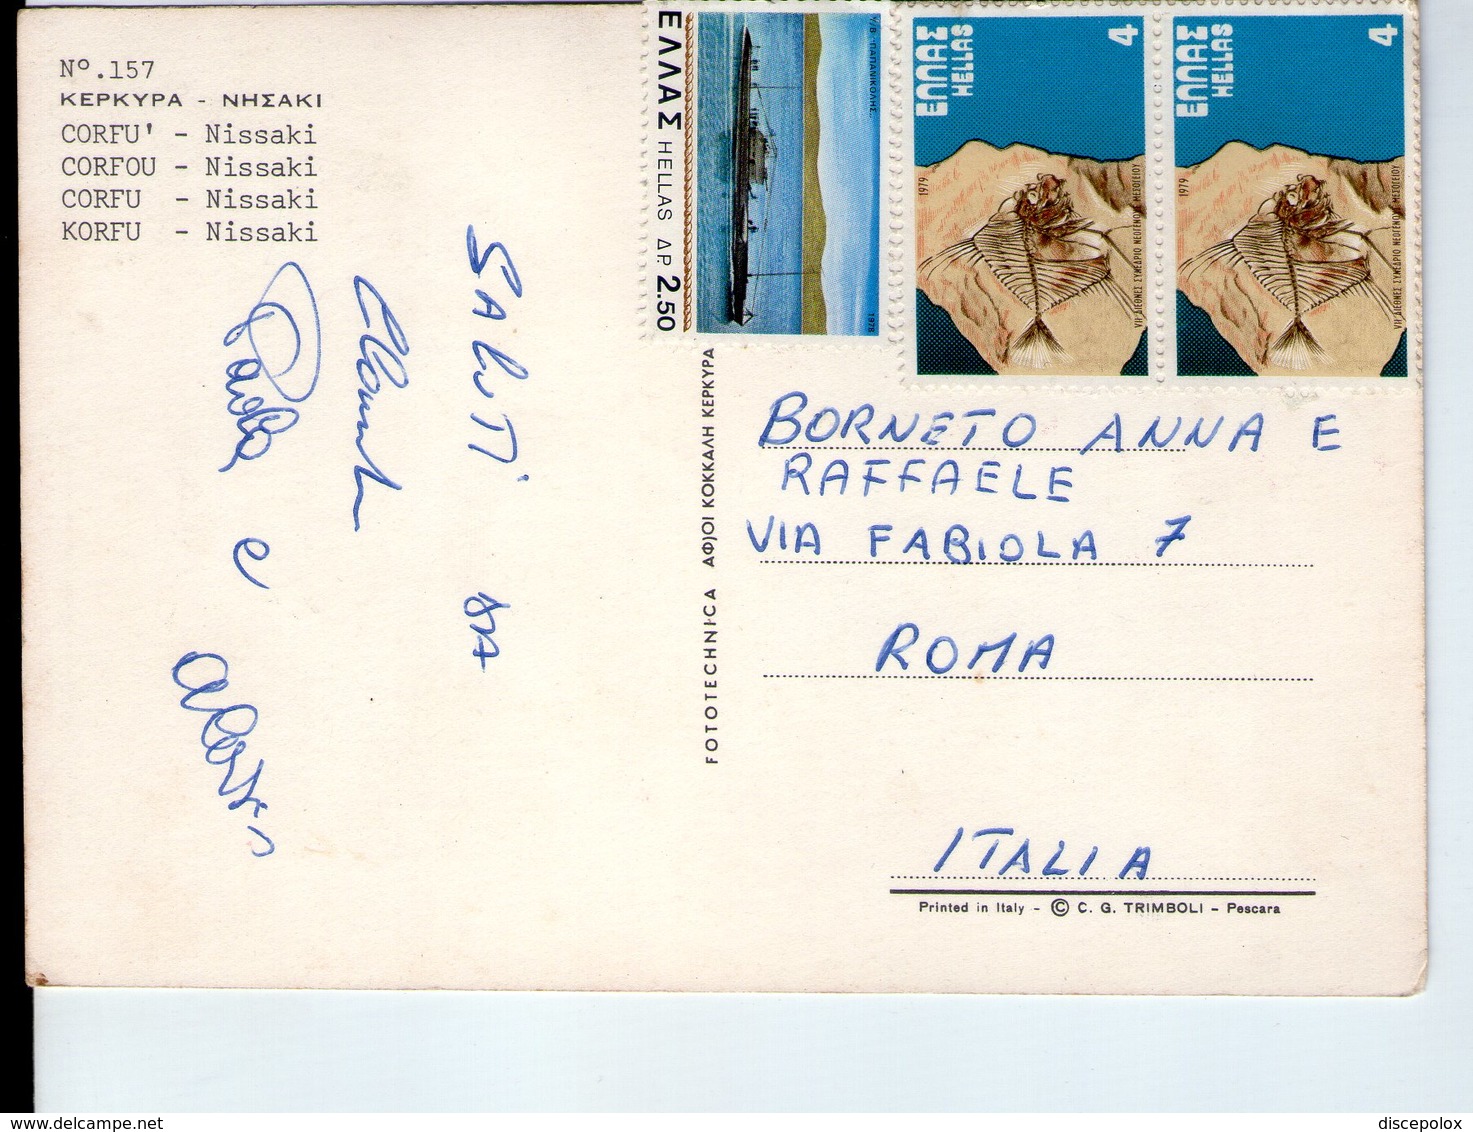 U4489 NICE STAMP On Postcard CORFU' - NISSAKI + NAVE NAVI BATEAU BEACH PLAGE STRAND _ FRANCOBOLLO COMMEMORATIVO - Grecia